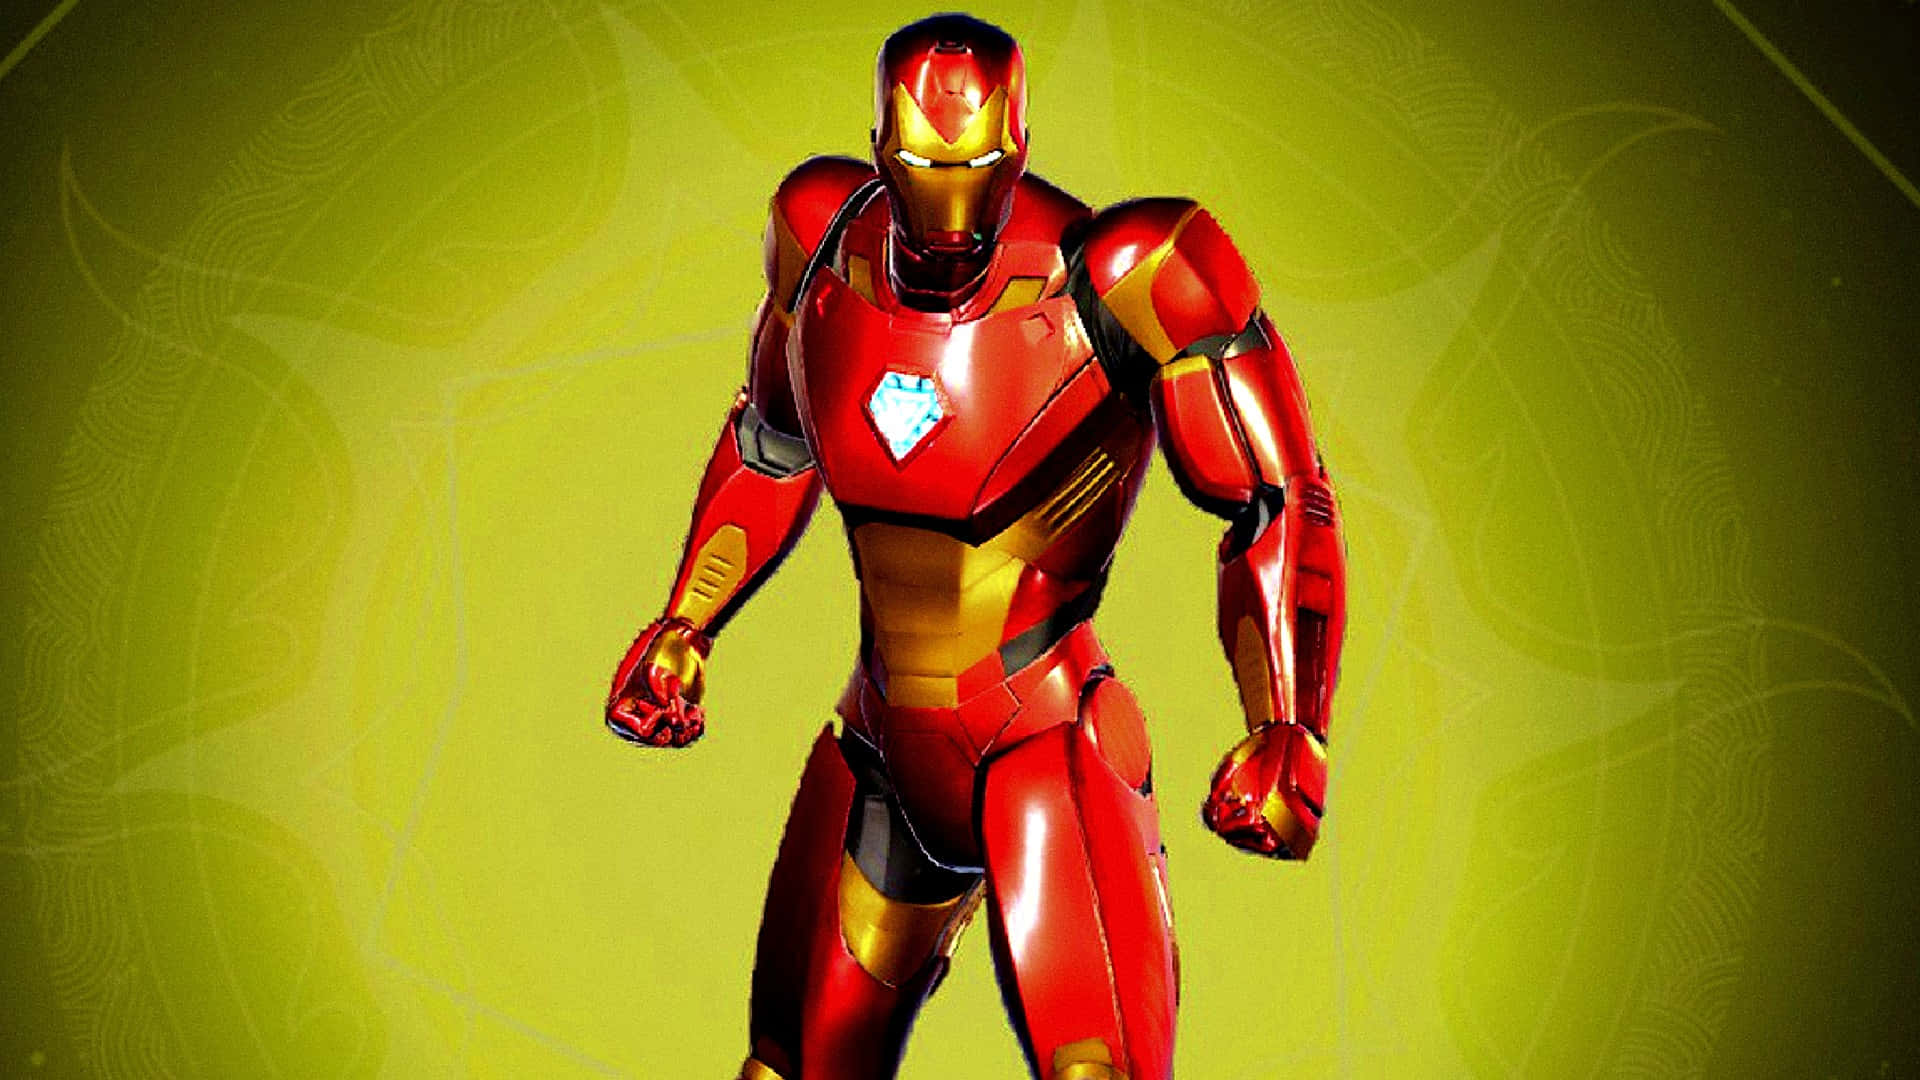 Artedigital En 3d De Iron Man En Una Imagen Amarilla.